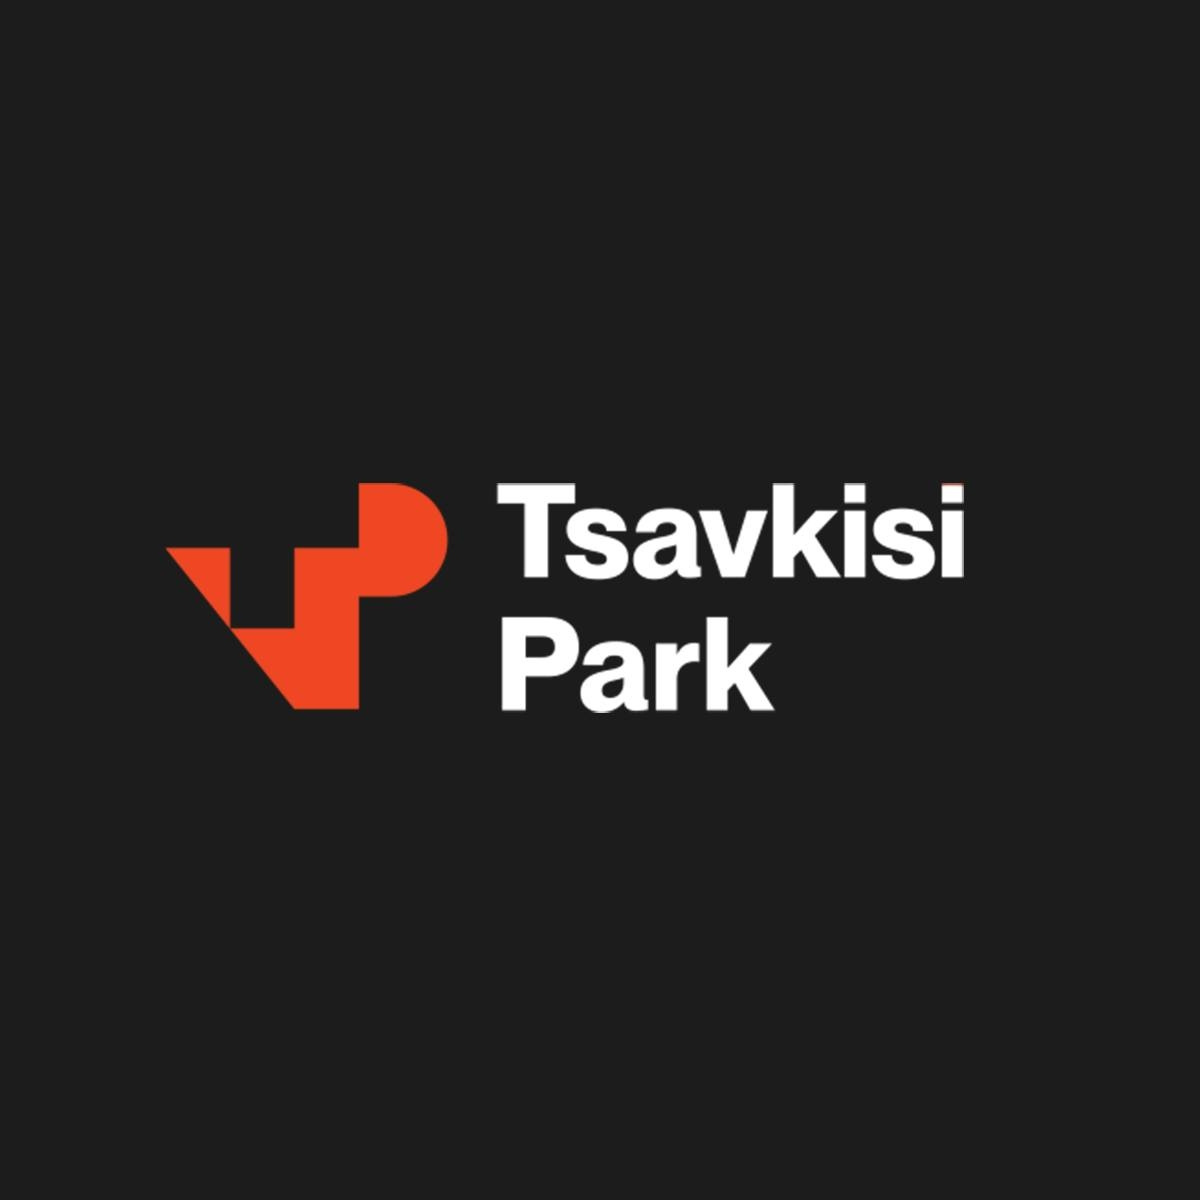 Tsavkisi Park • წავკისი პარკი